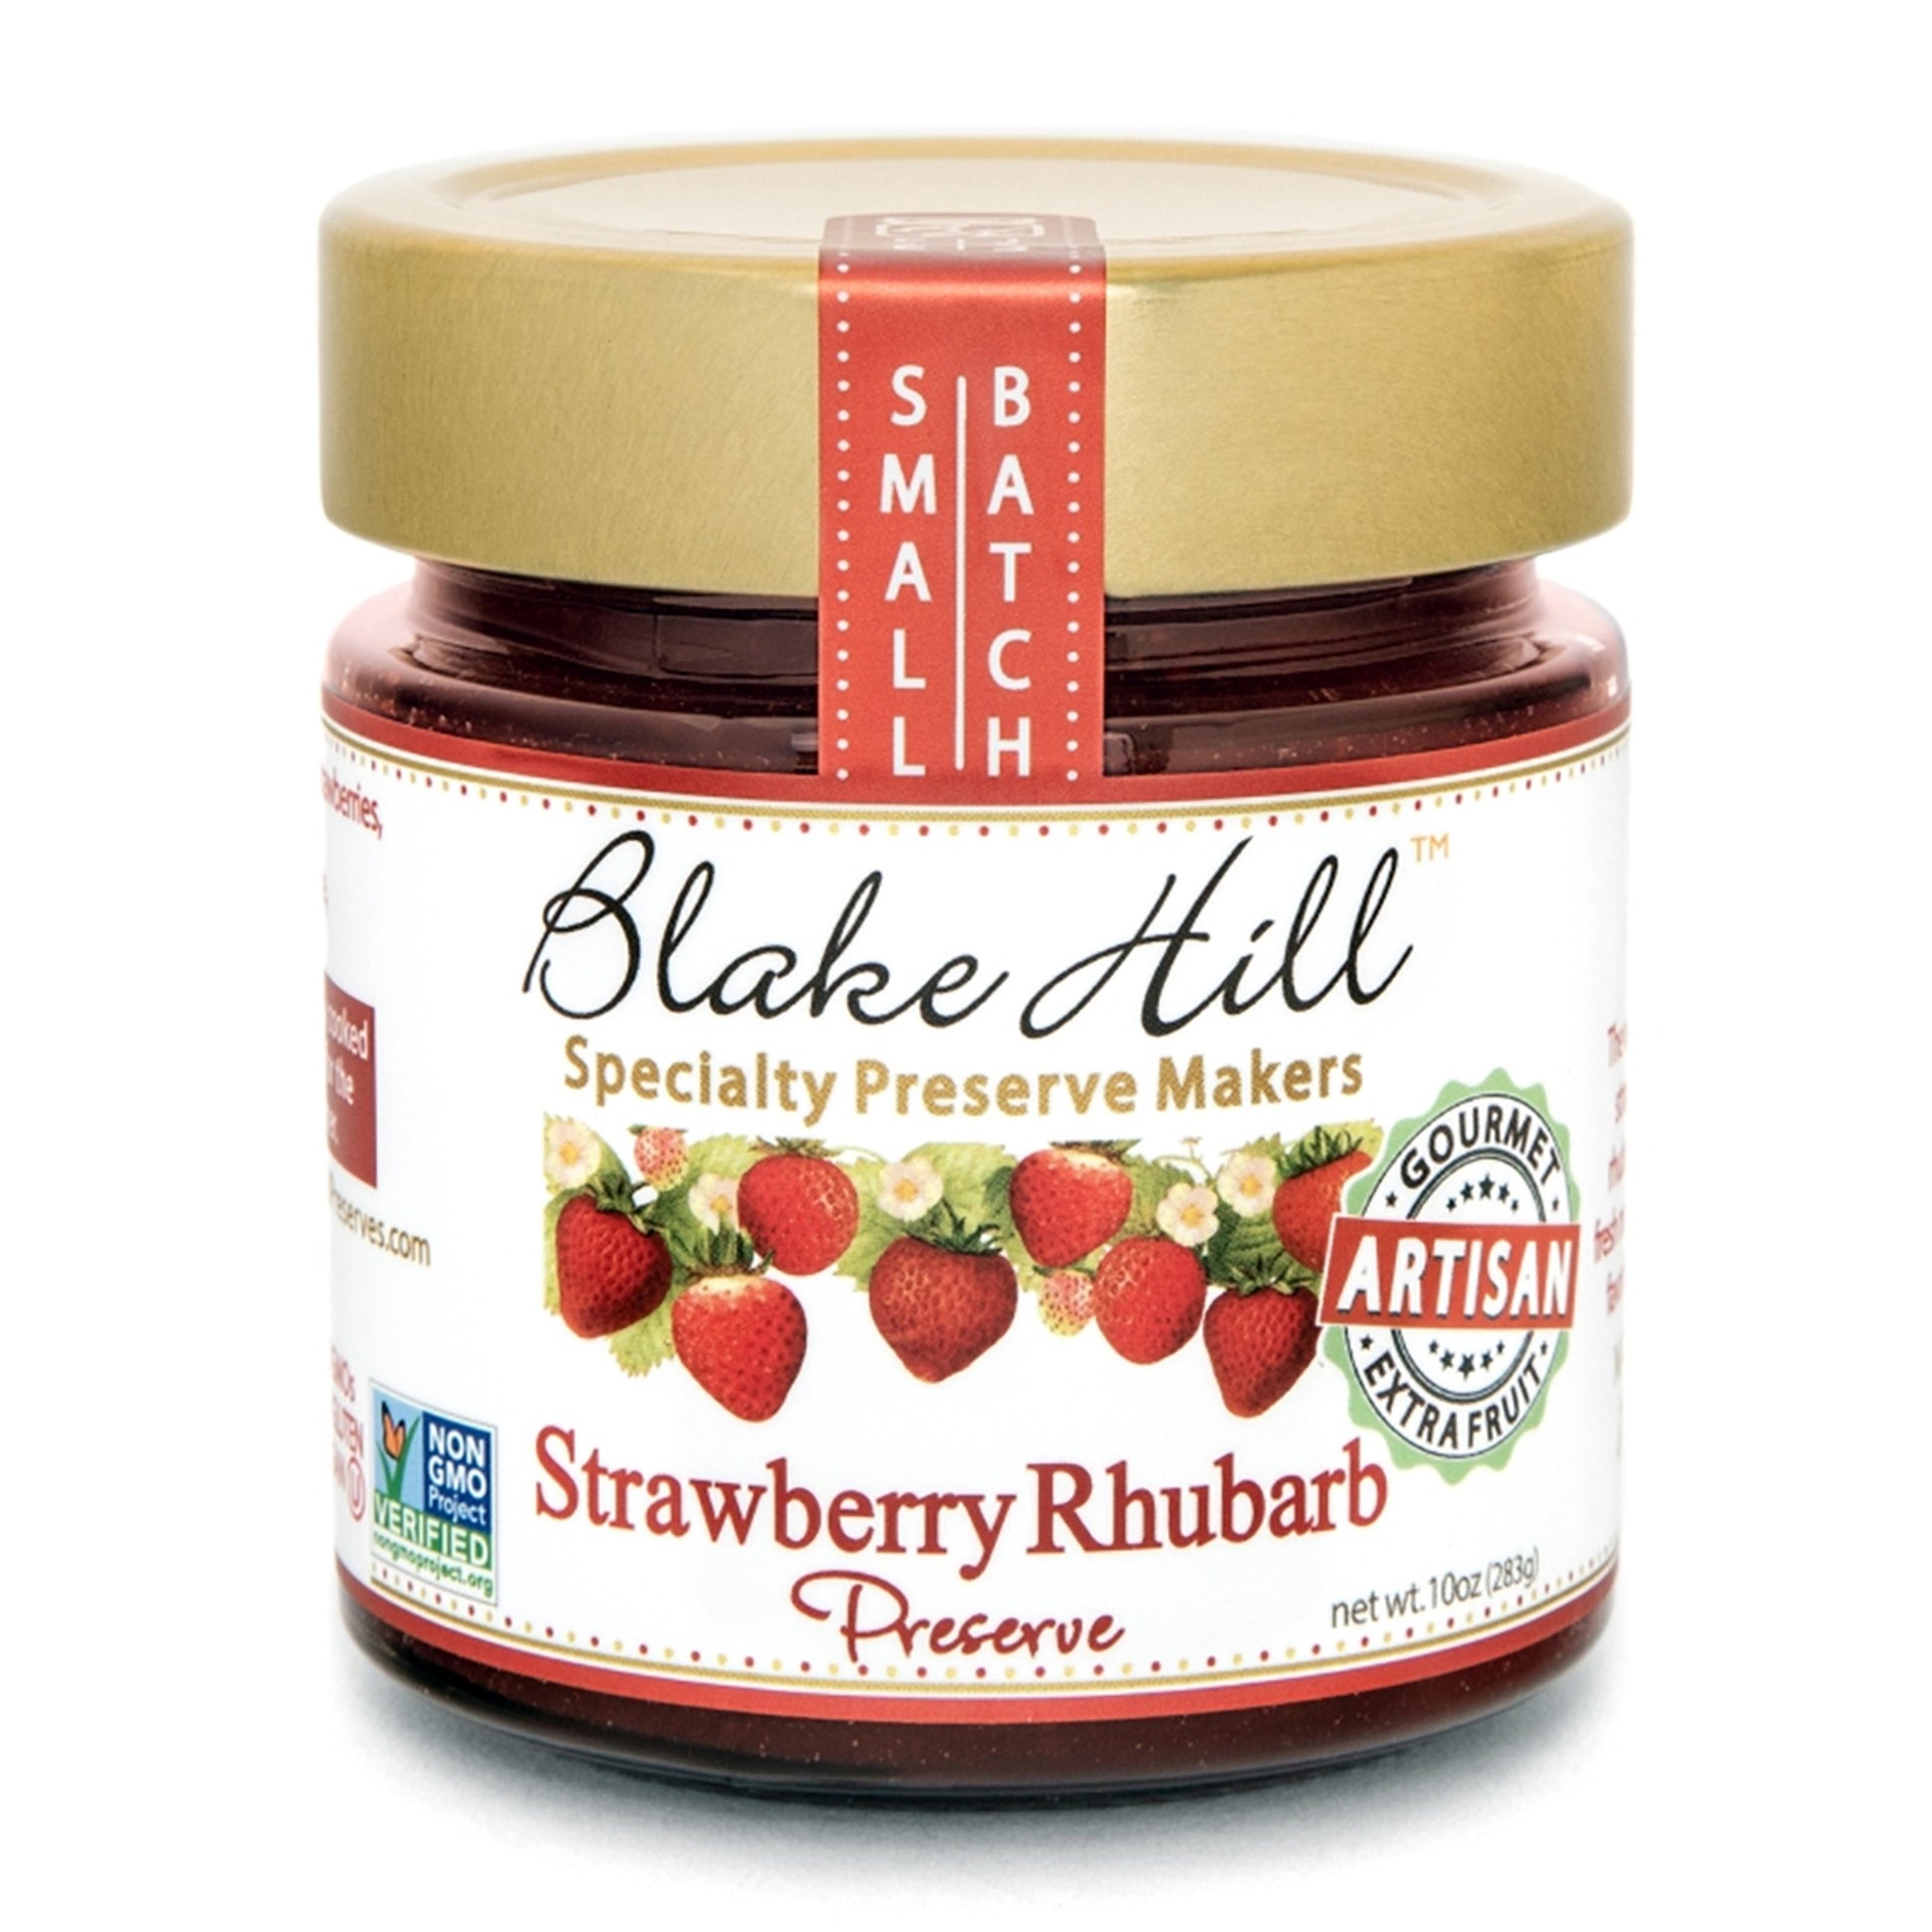 Blake Hill Strawberry Rhubarb Preserve